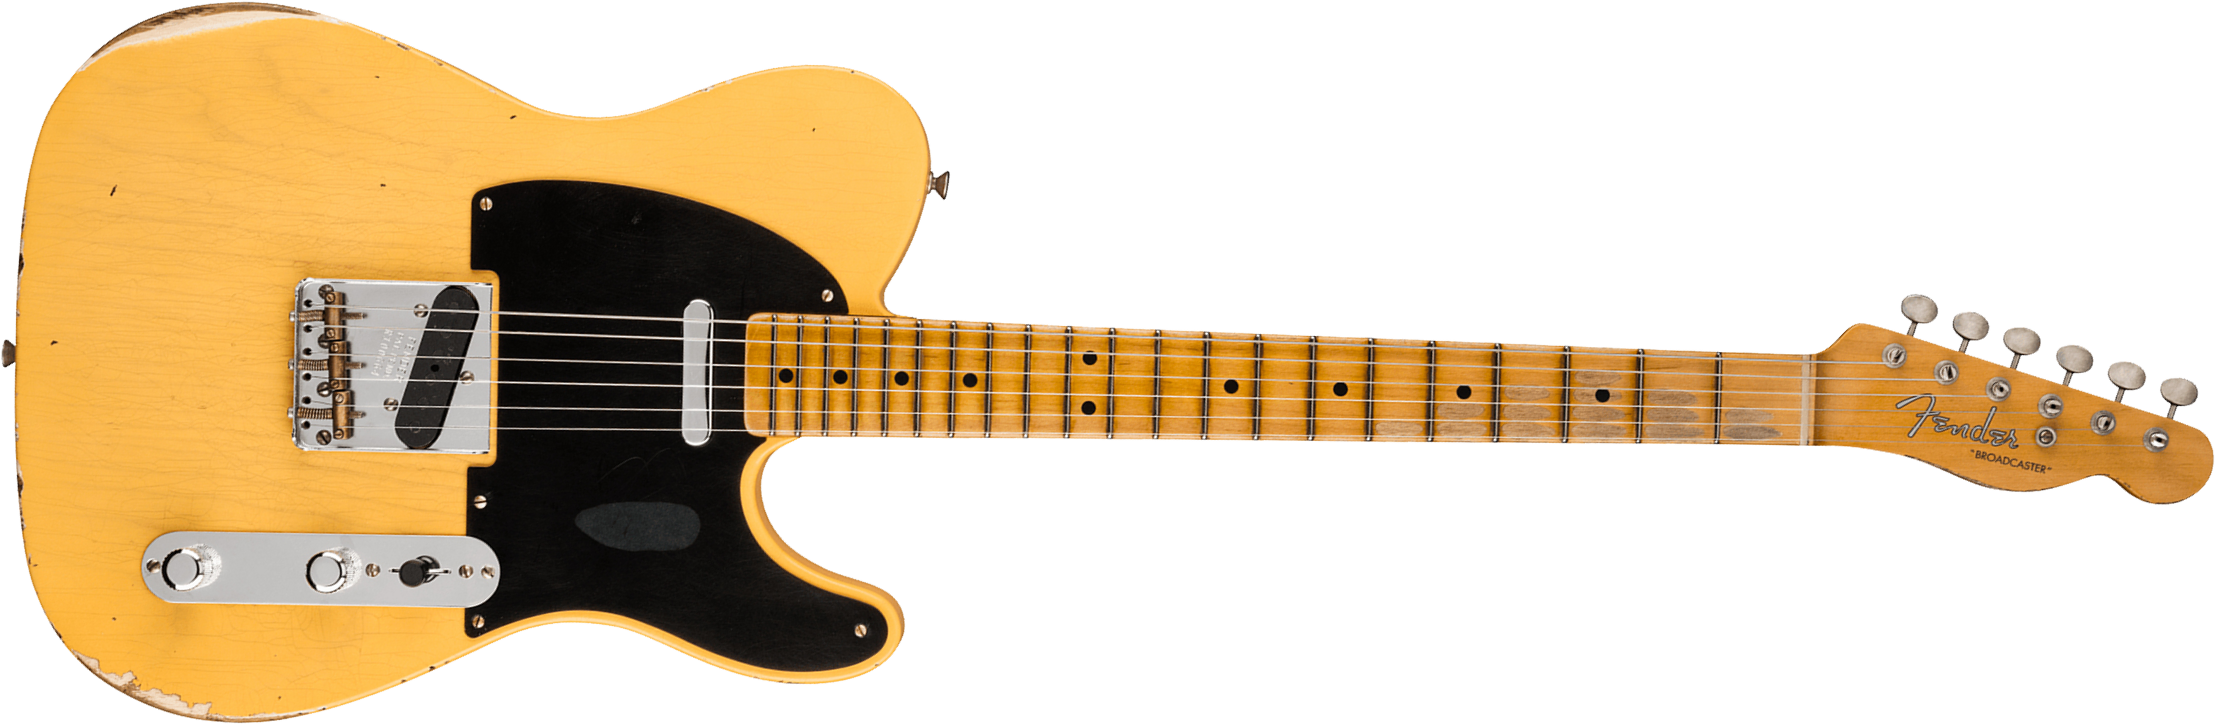 Fender Custom Shop Broadcaster Tele 70th Anniversary Ltd Mn - Relic Aged Nocaster Blonde - Guitare Électrique Forme Tel - Main picture